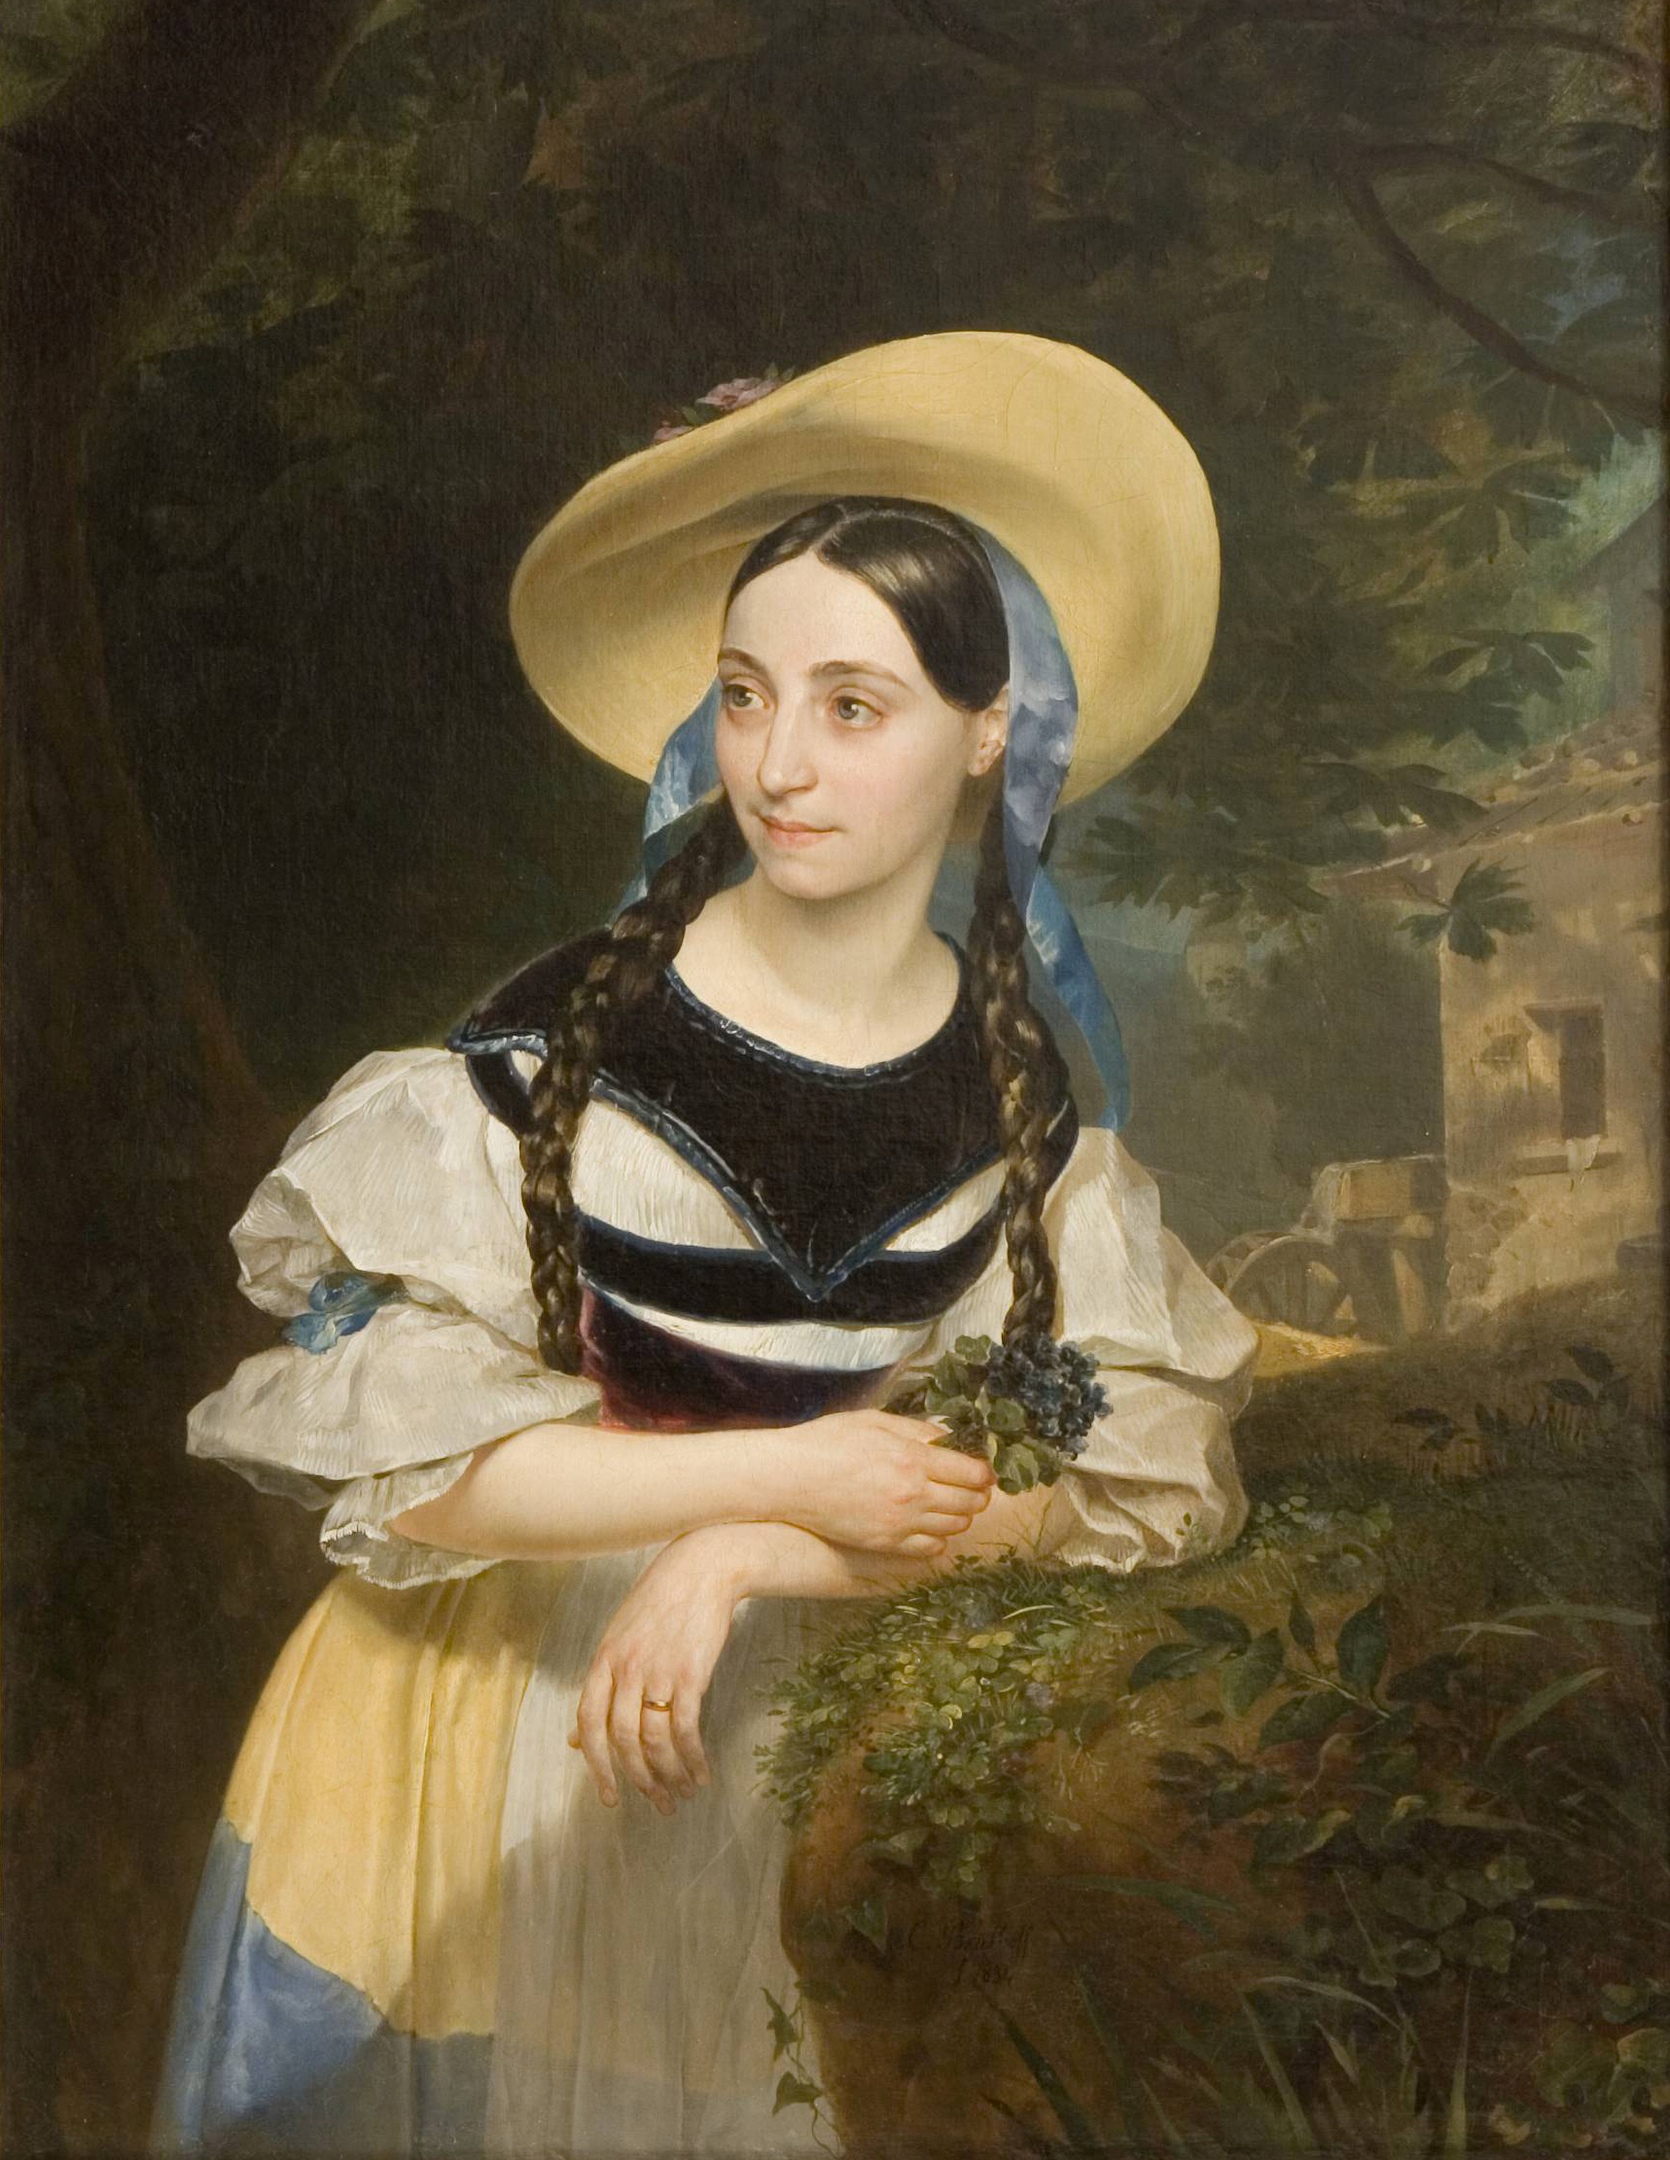 Portrait de Fanny Persiani-Tacchinardi en Amina by Karl Bryullov - 1834 